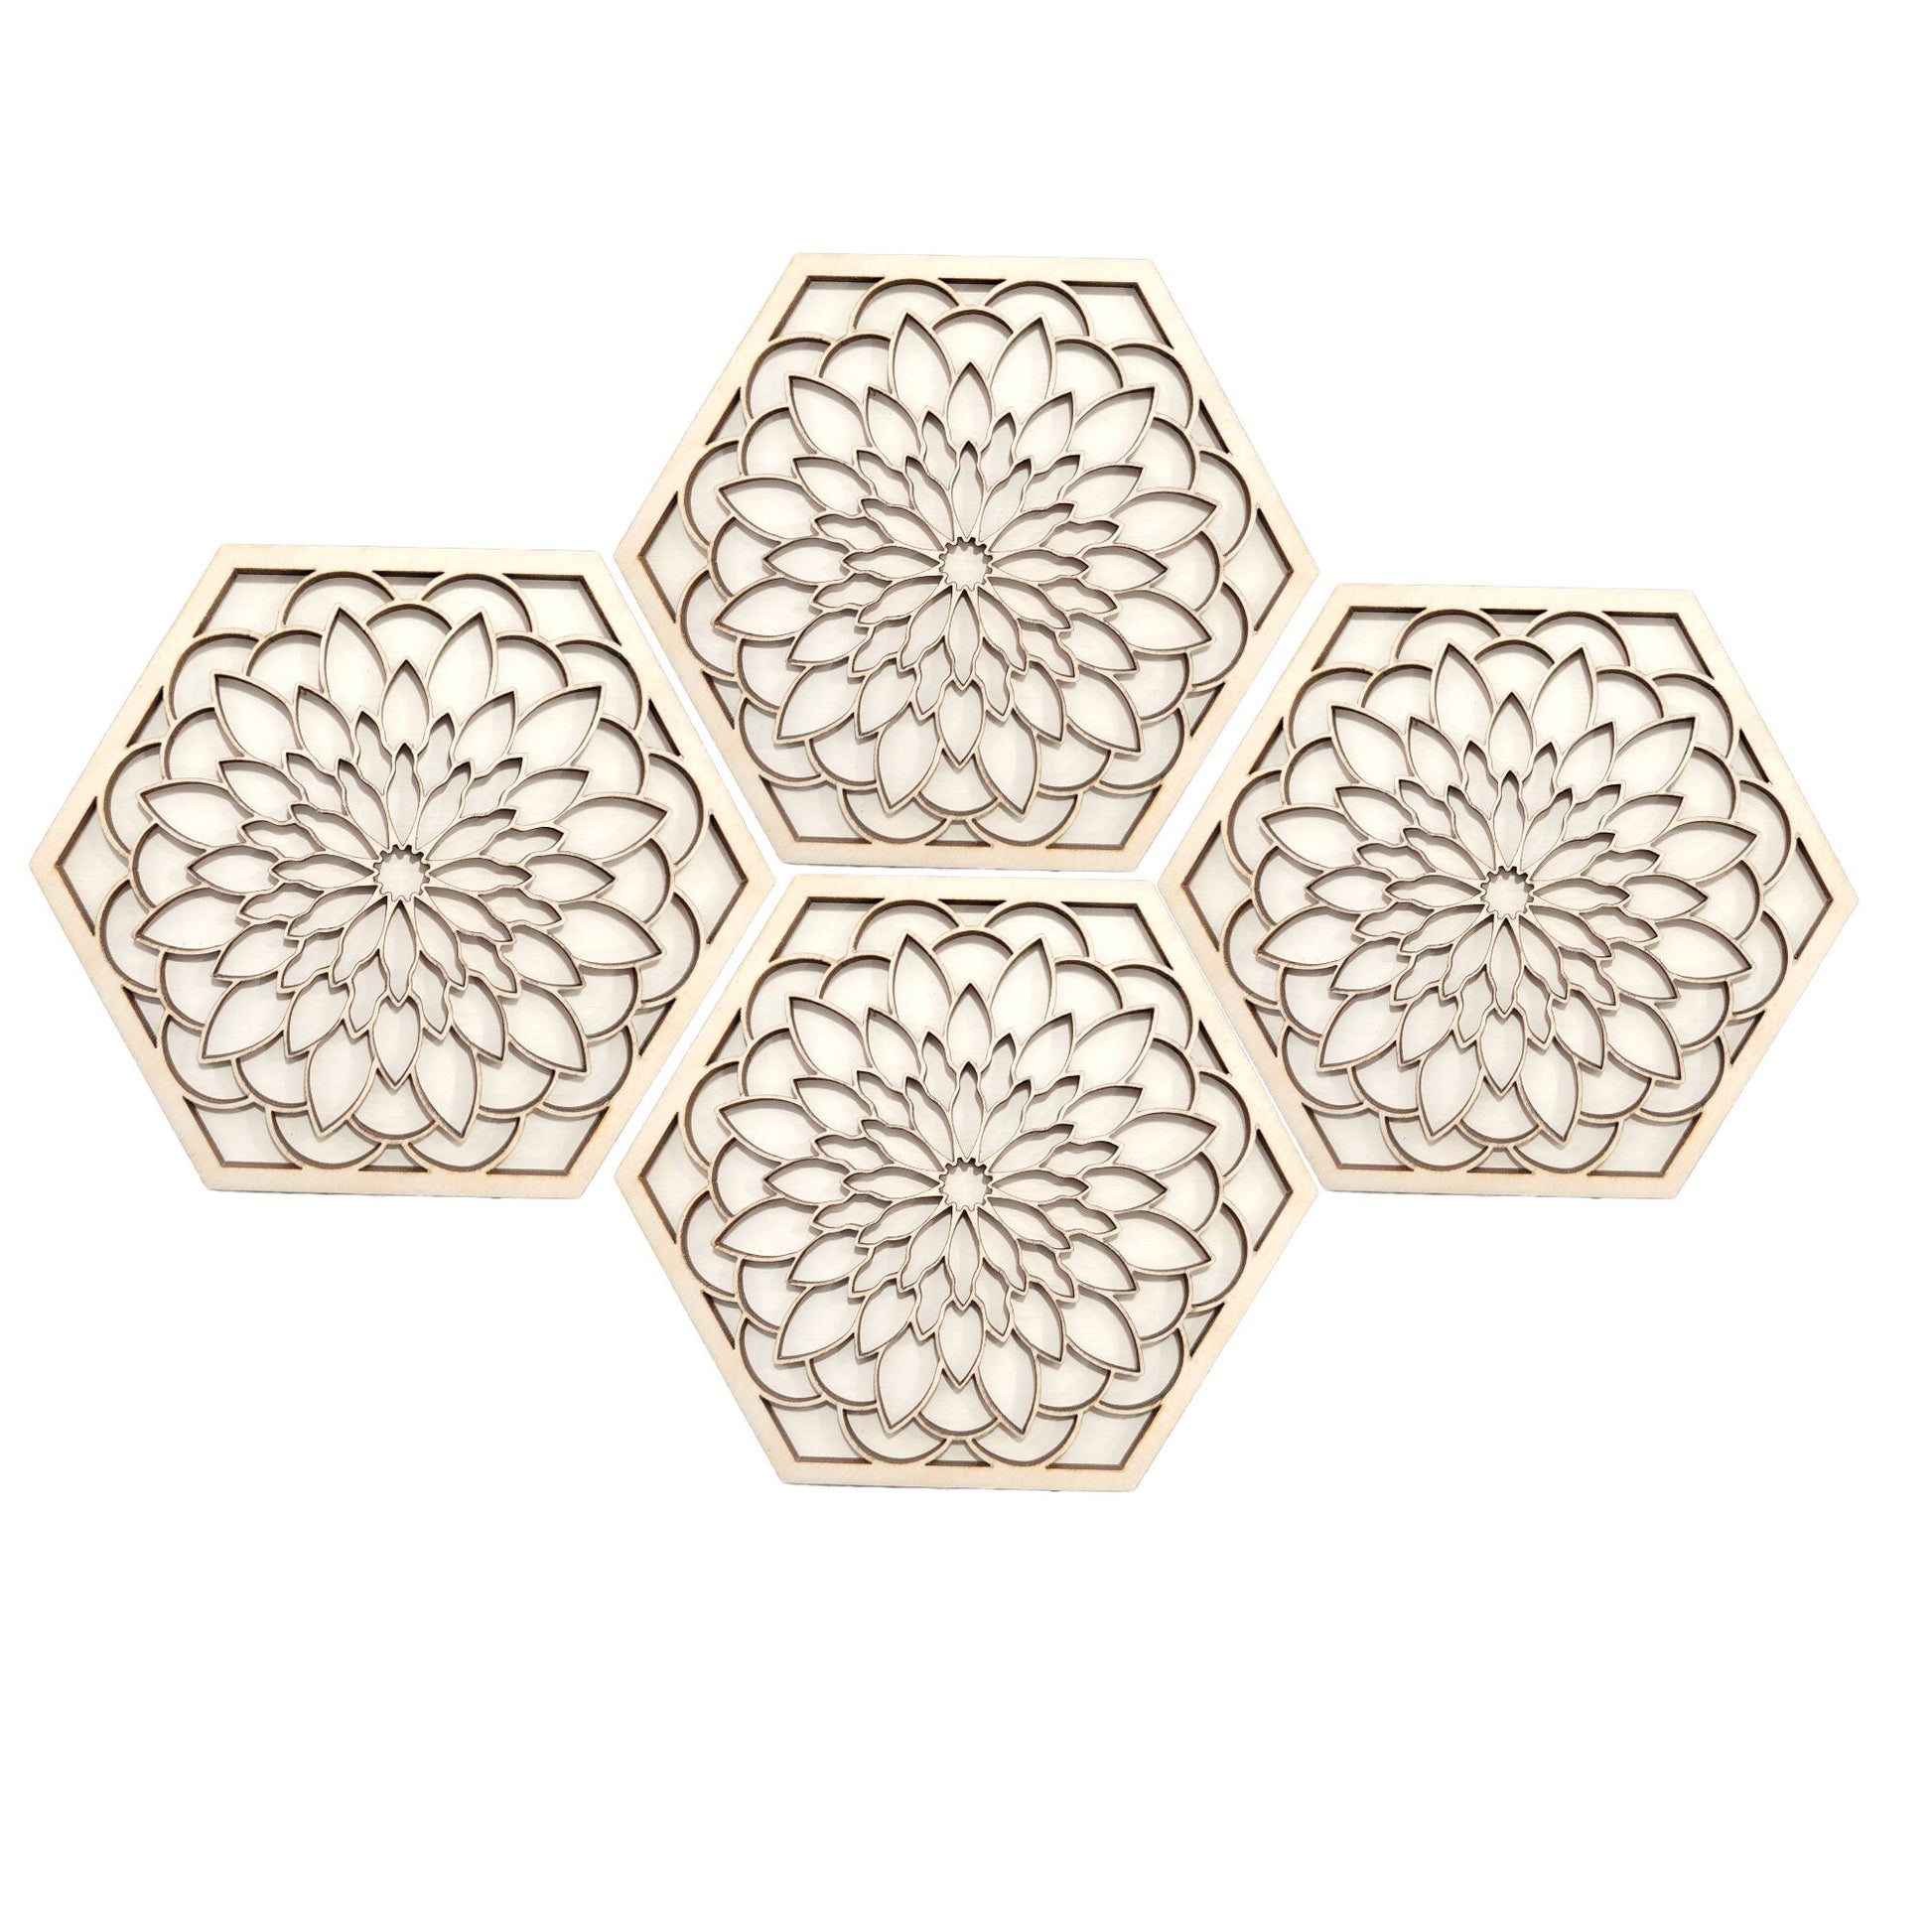 Wall Art Hexagon Peonie Flower Wall Tiles | Jones Laser Craft Personalized Gift